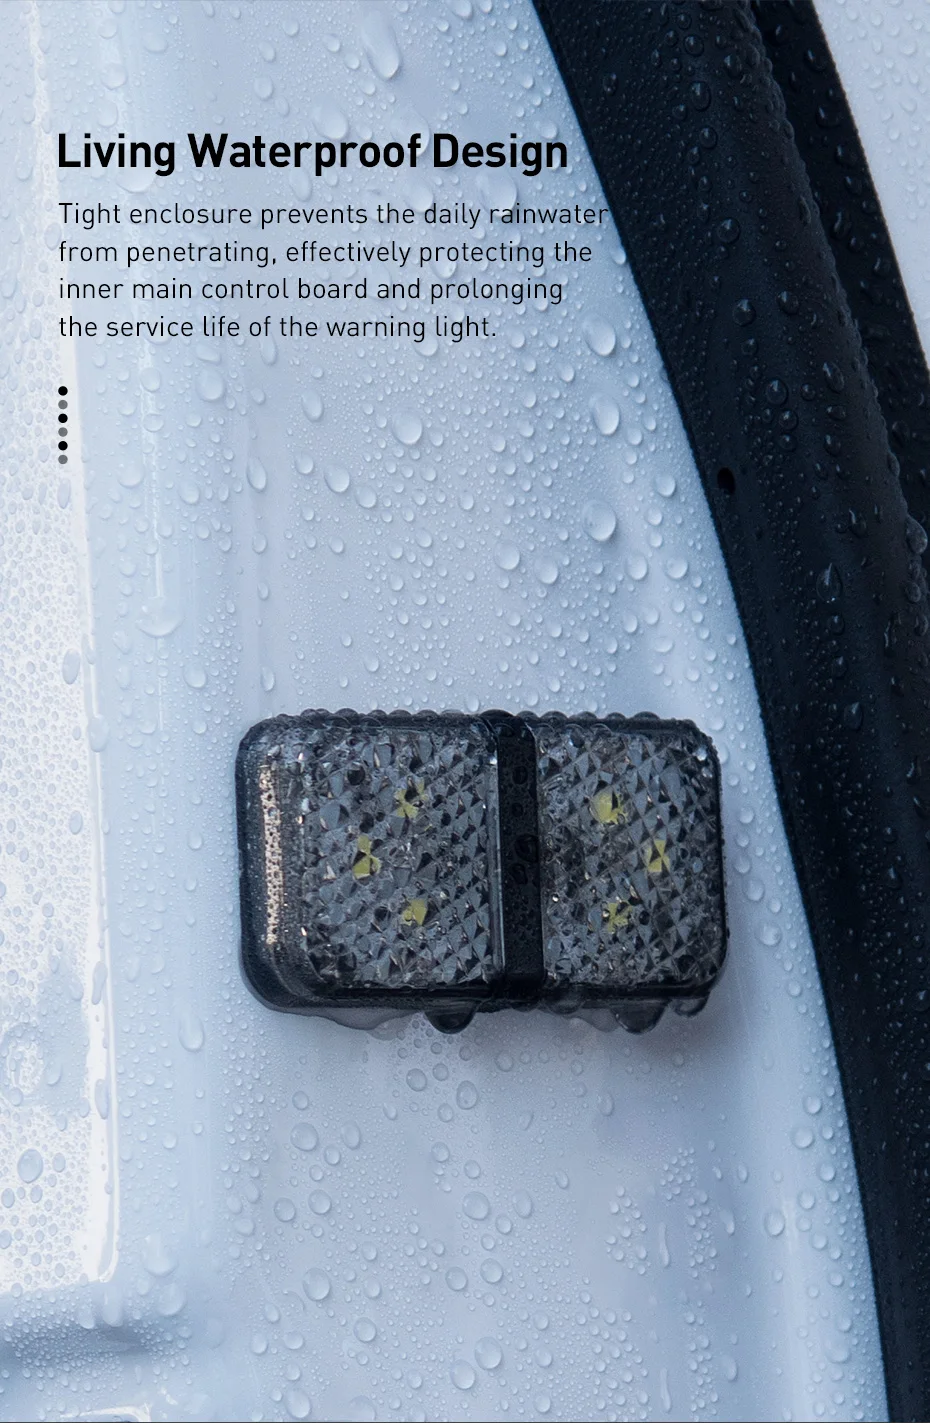 Baseus 2Pcs 6 LEDs Car Openning Door Warning Light Safety Anti-collision Flash